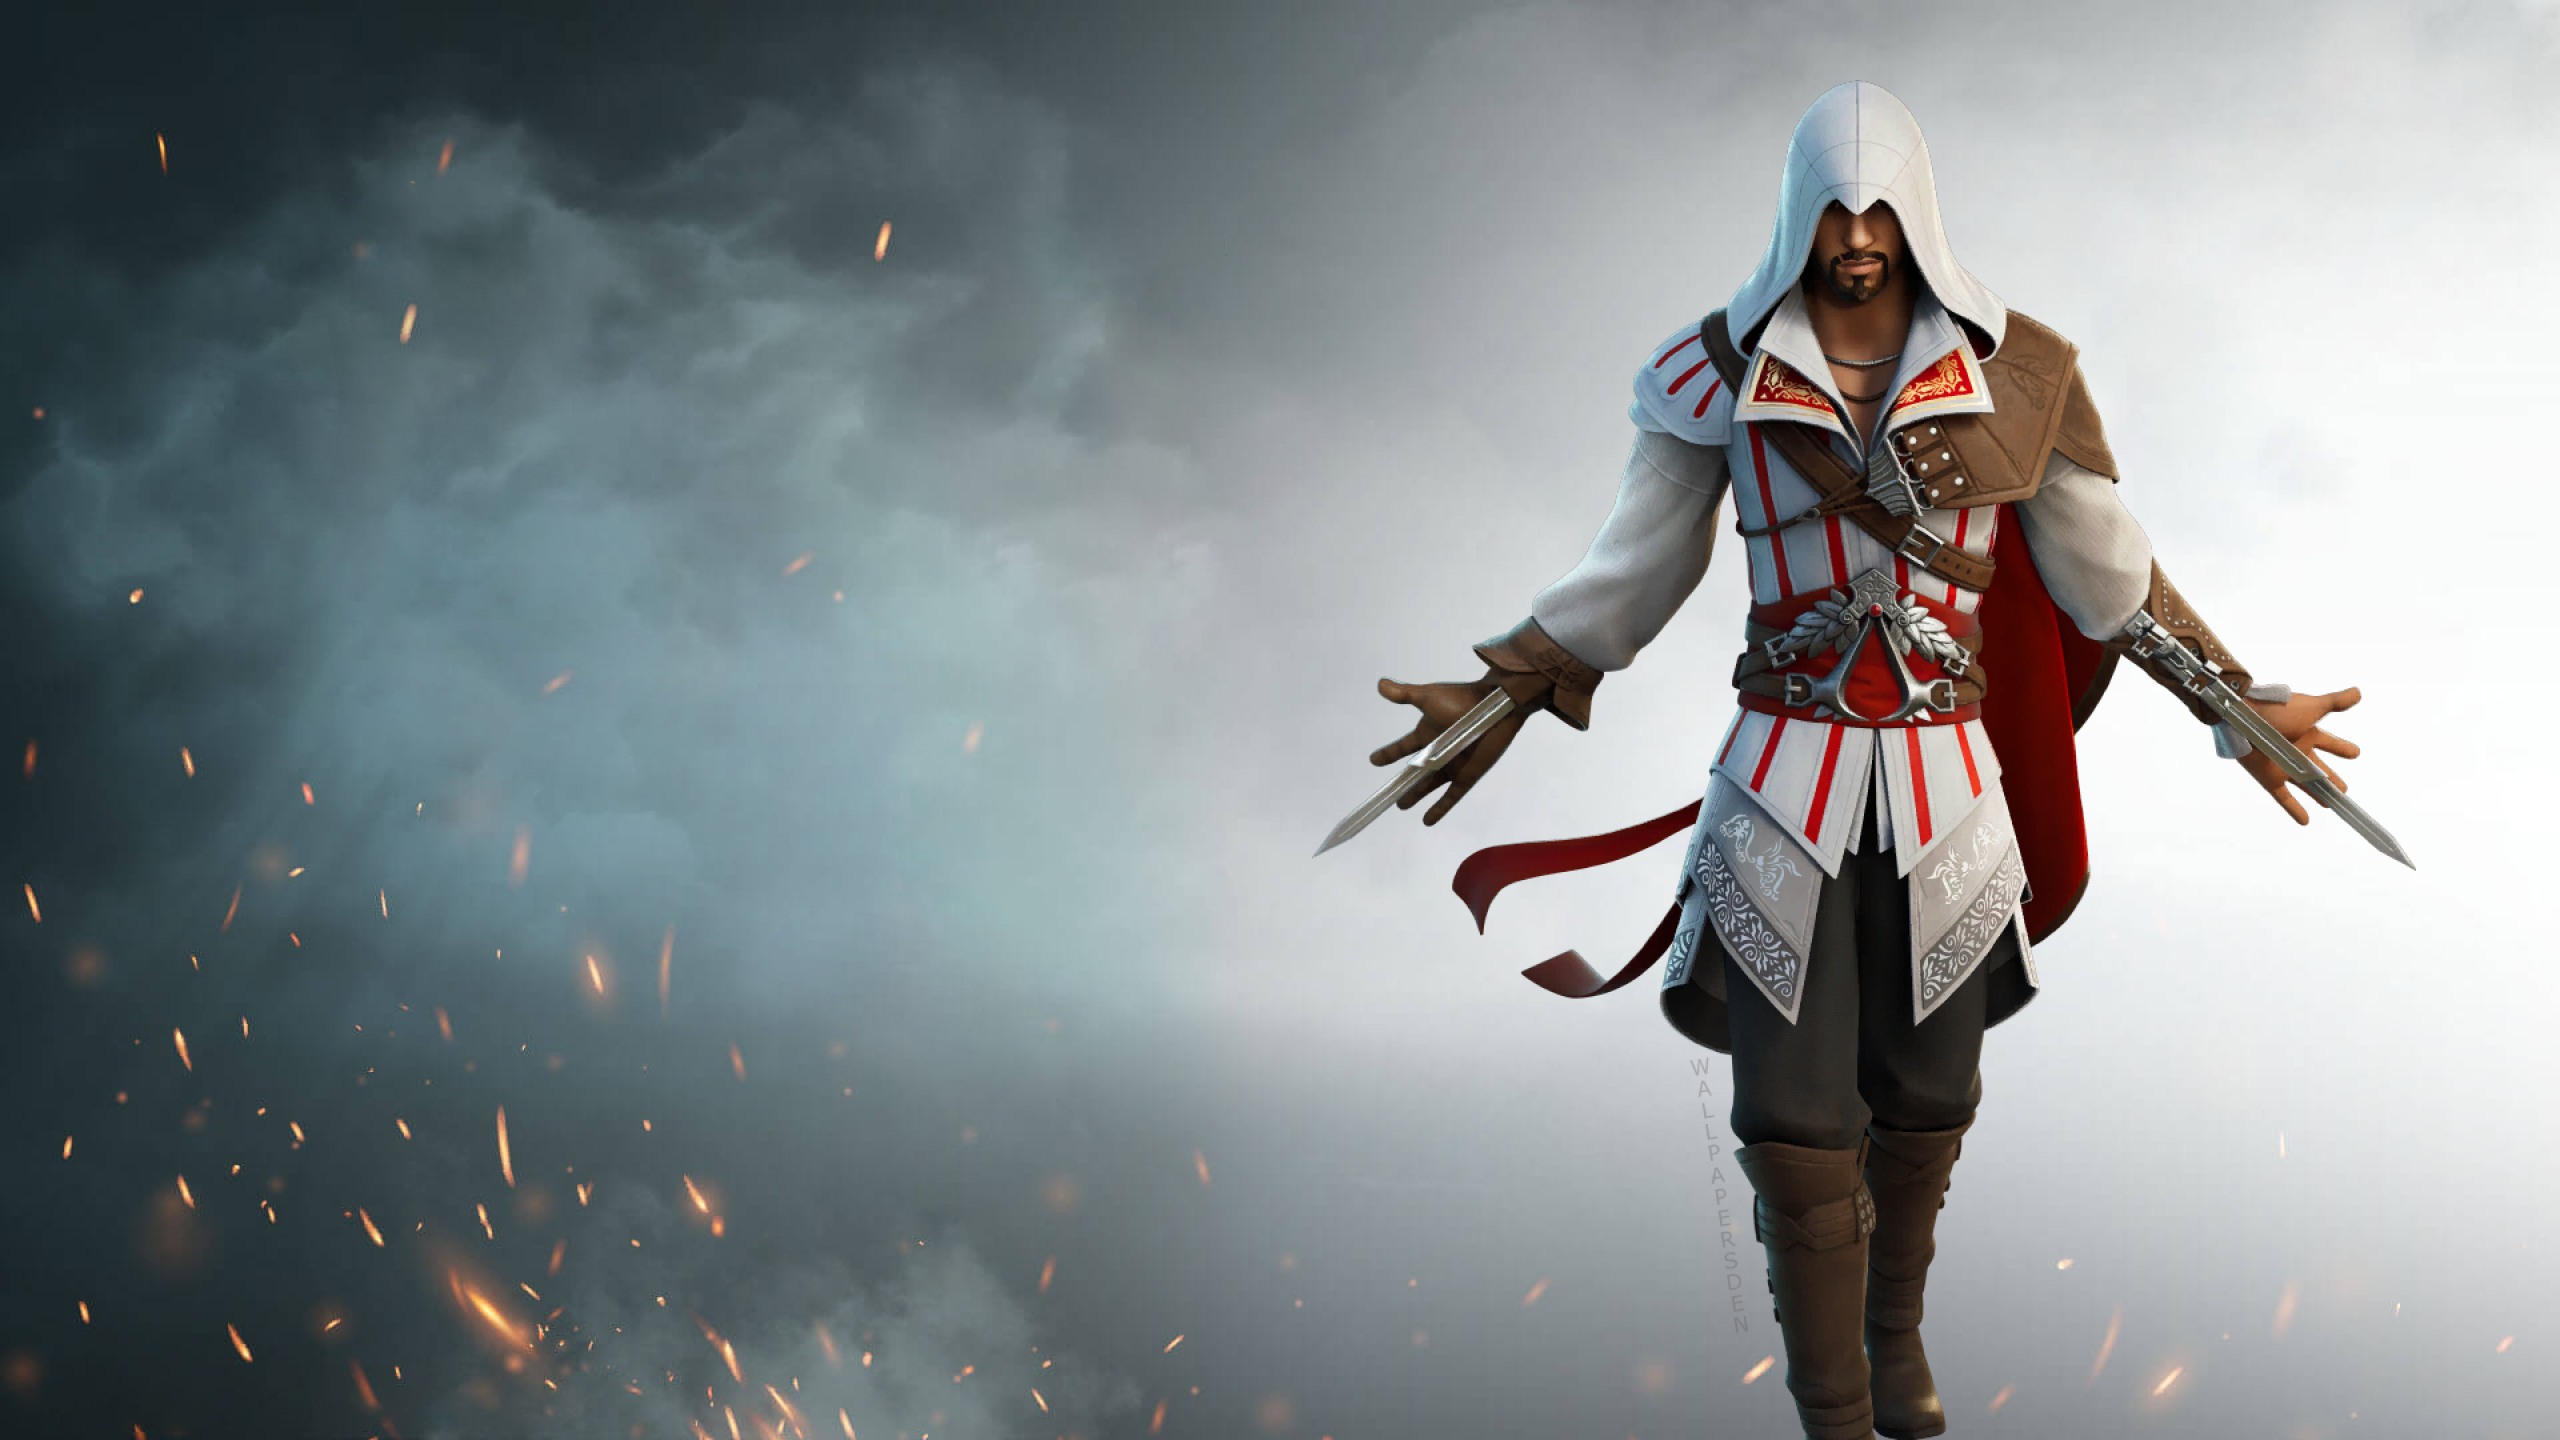 9. Ezio Auditore (Assassin's Creed) - wide 5